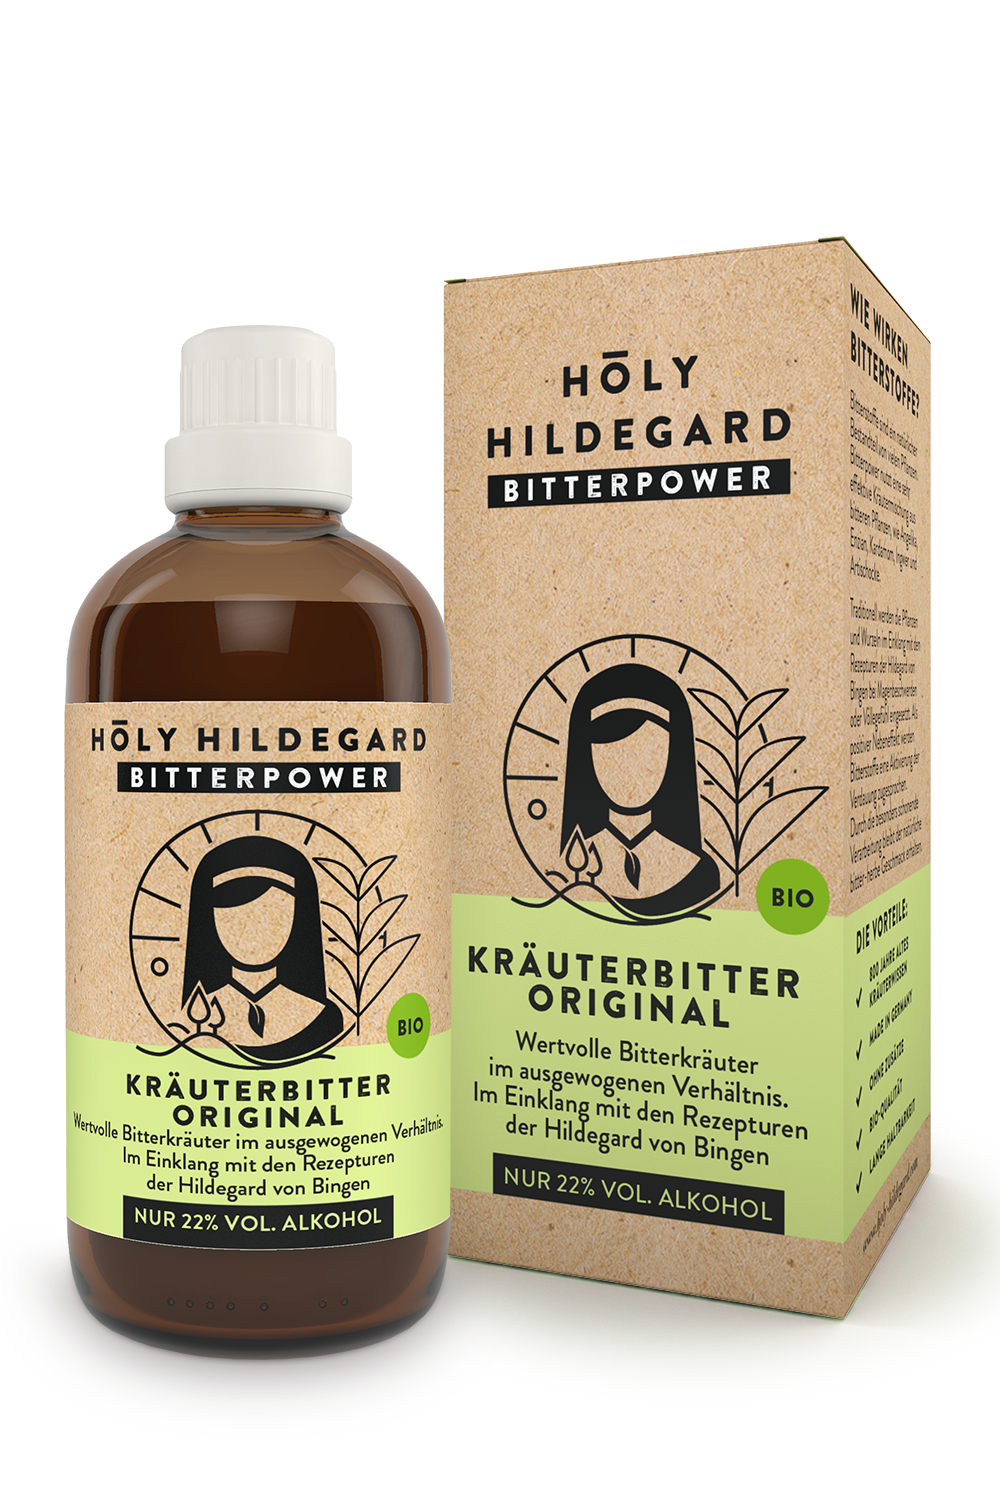 Holy Hildegard BitterPower Kräuterbitter Original (BIO) 100 ml